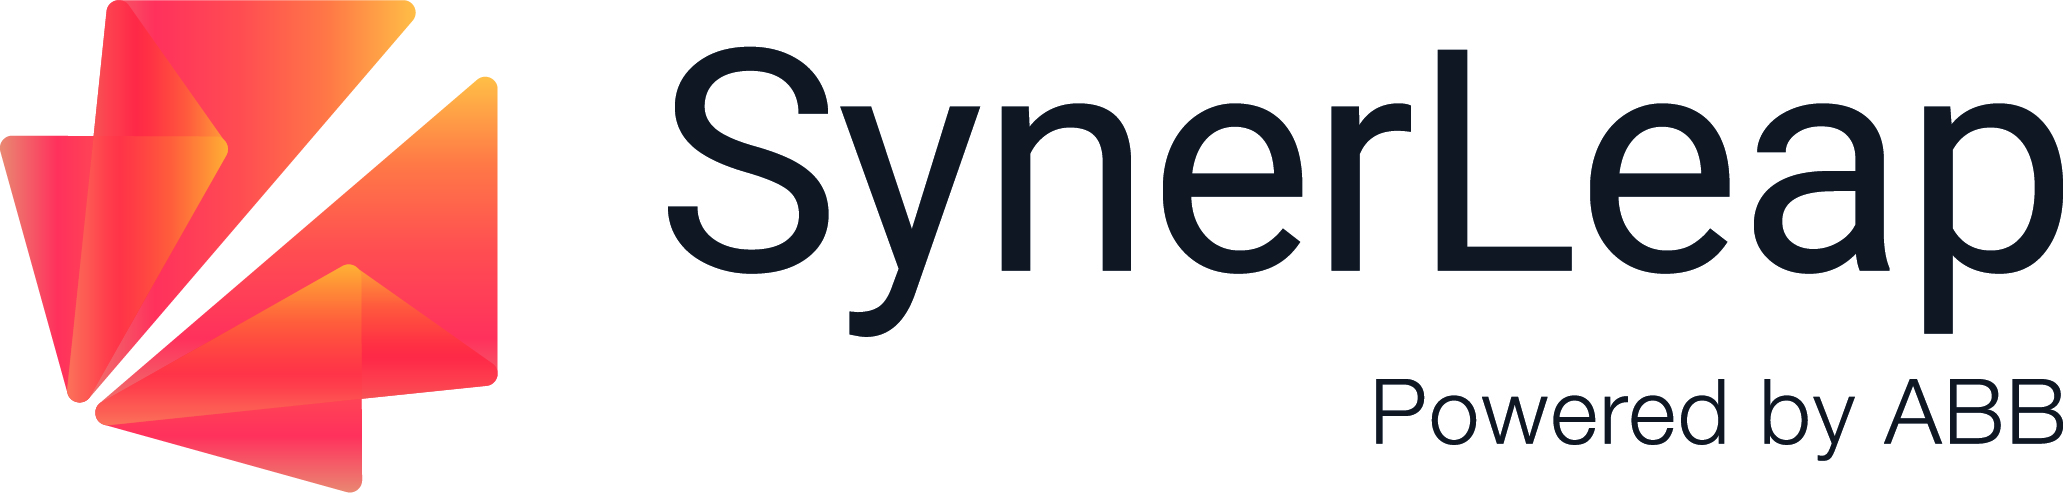 Synerleap